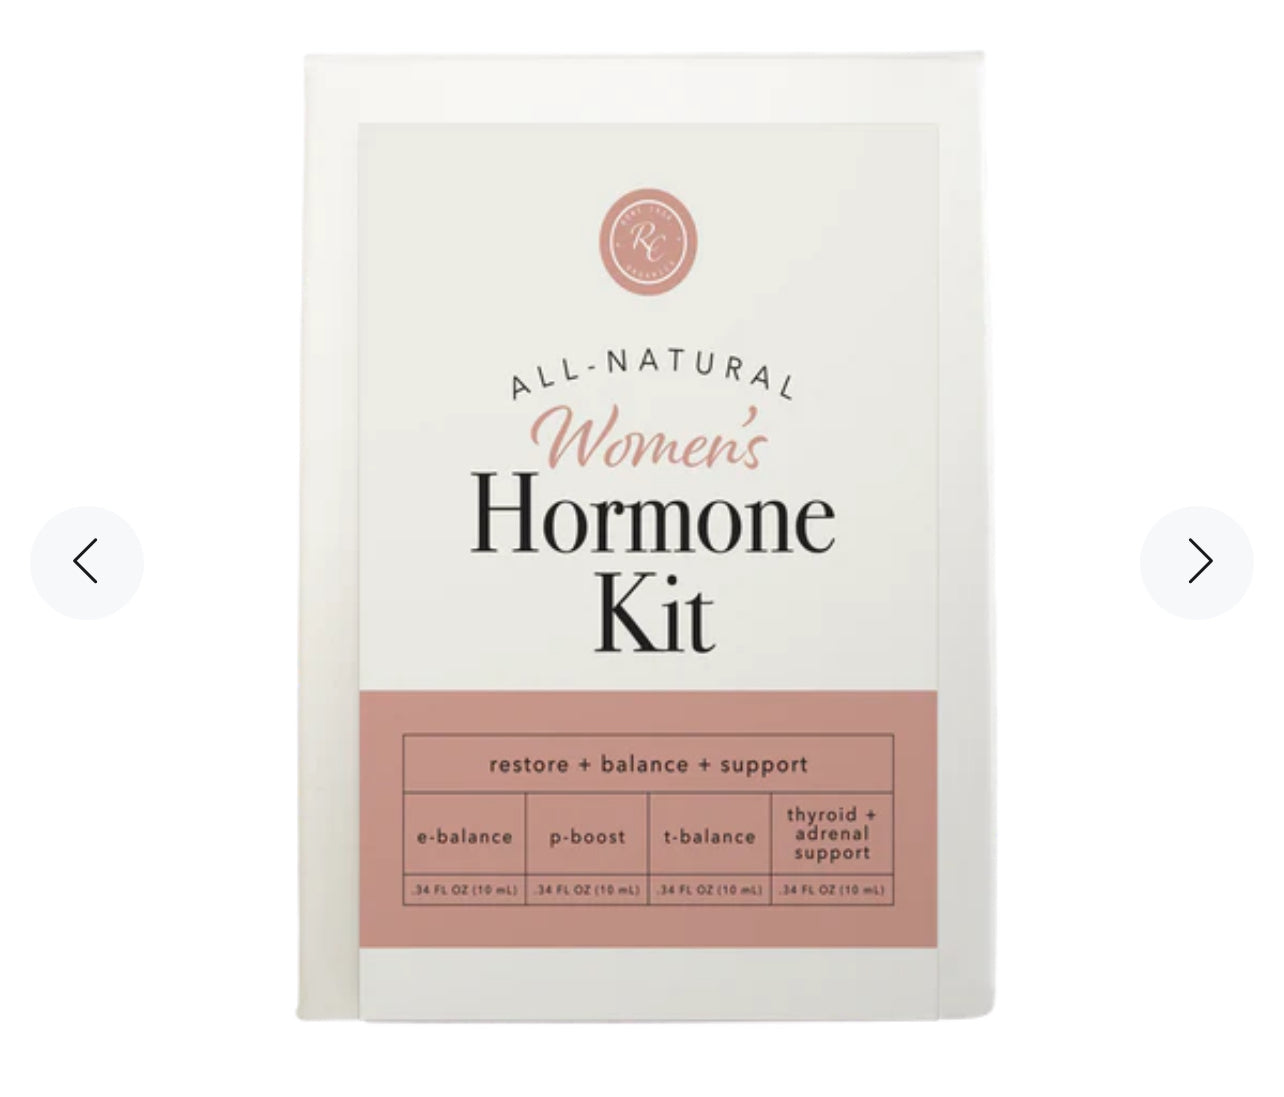 Rowe casa women’s hormone kit